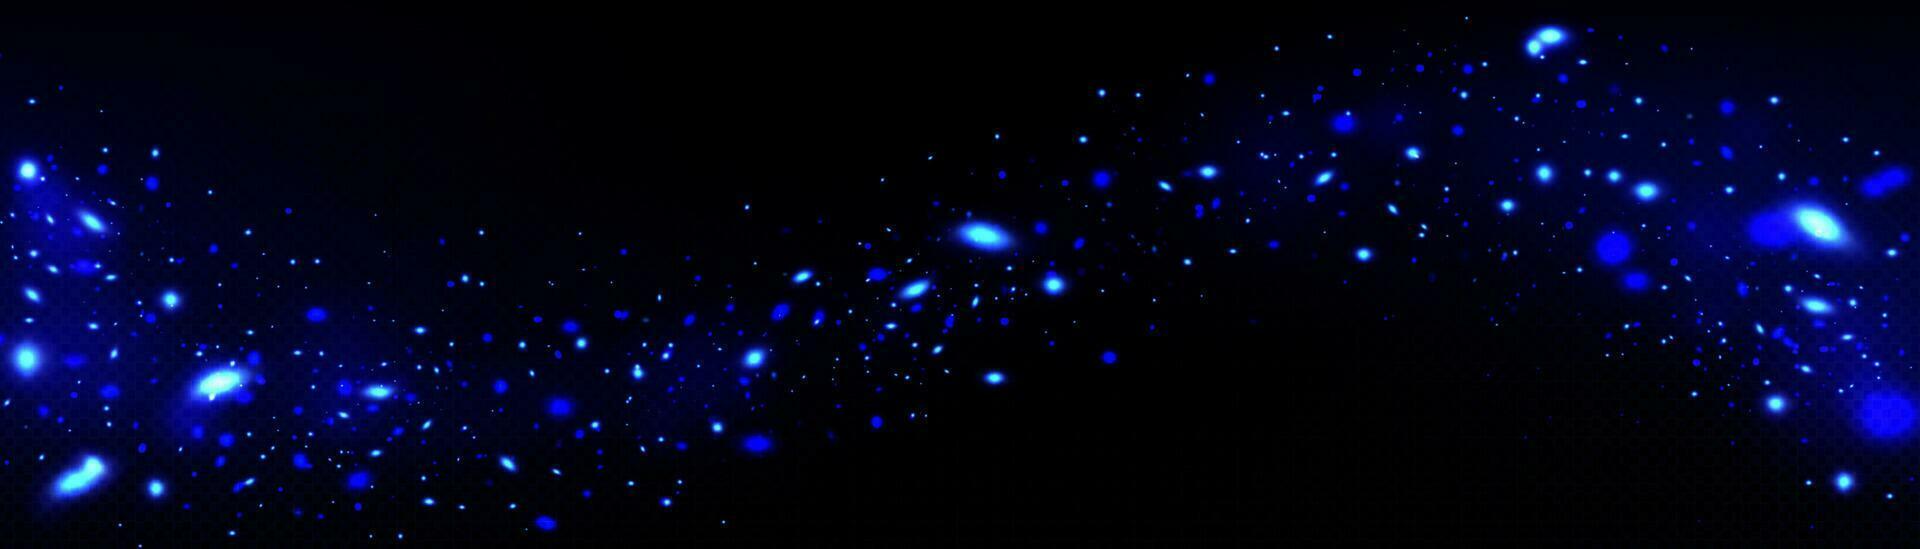 Blue fireflies glowing on dark background vector